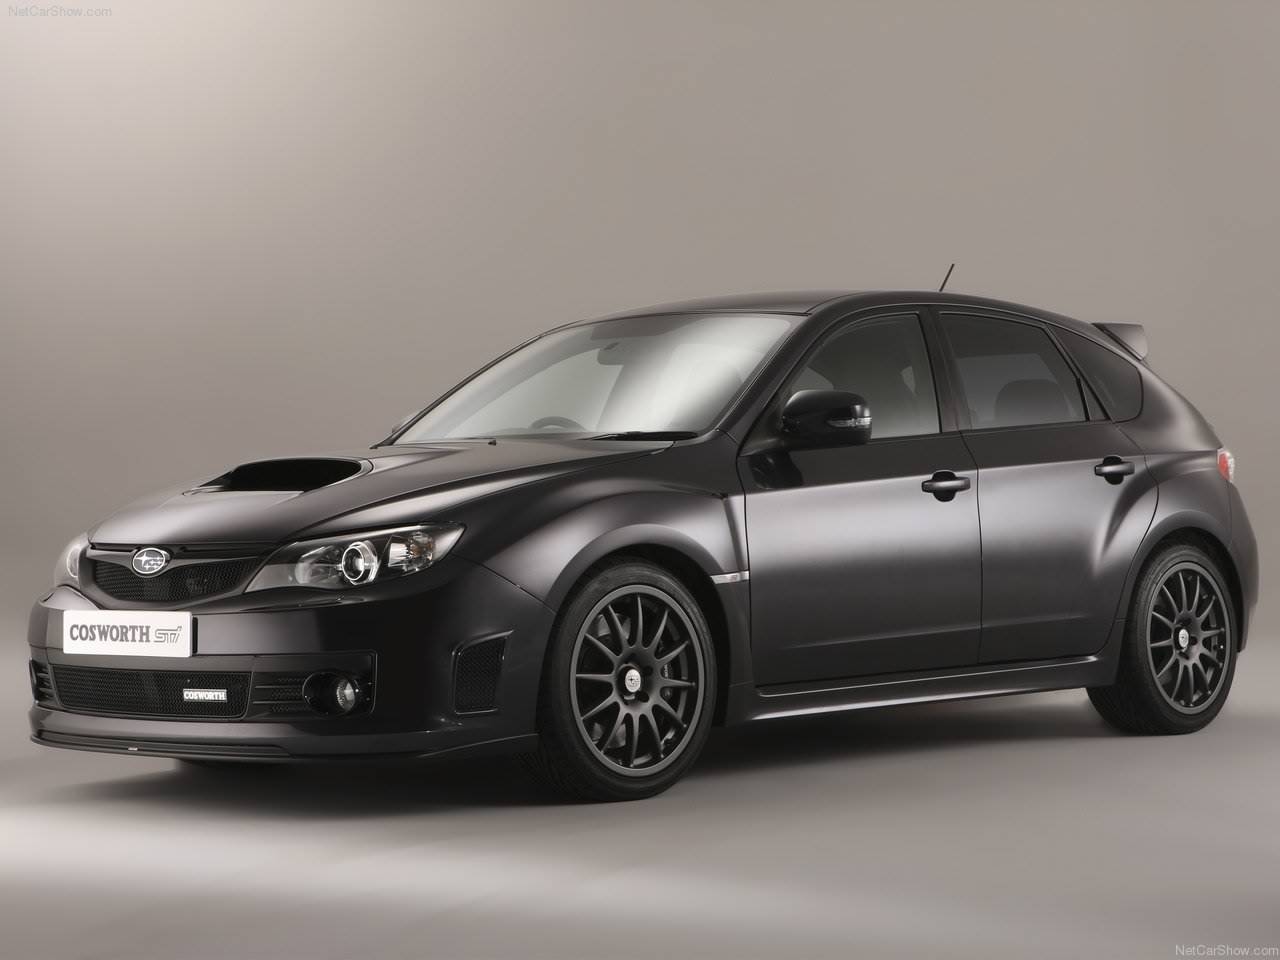 ... - Auto twenty-first century: 2011 Subaru Impreza STI Cosworth CS400